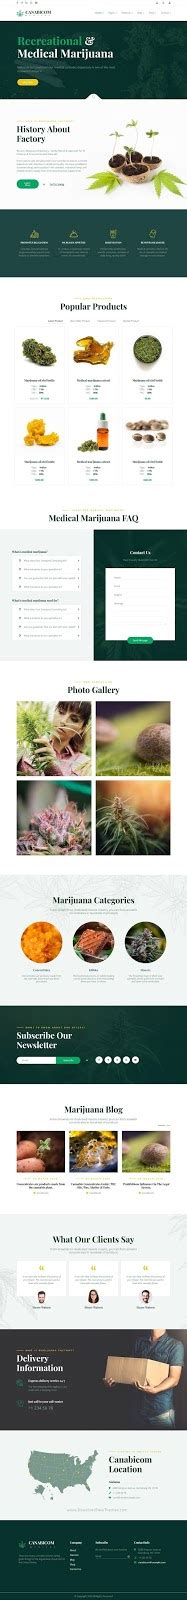 Canabicom Medical Cannabis Joomla Responsive Template Download New